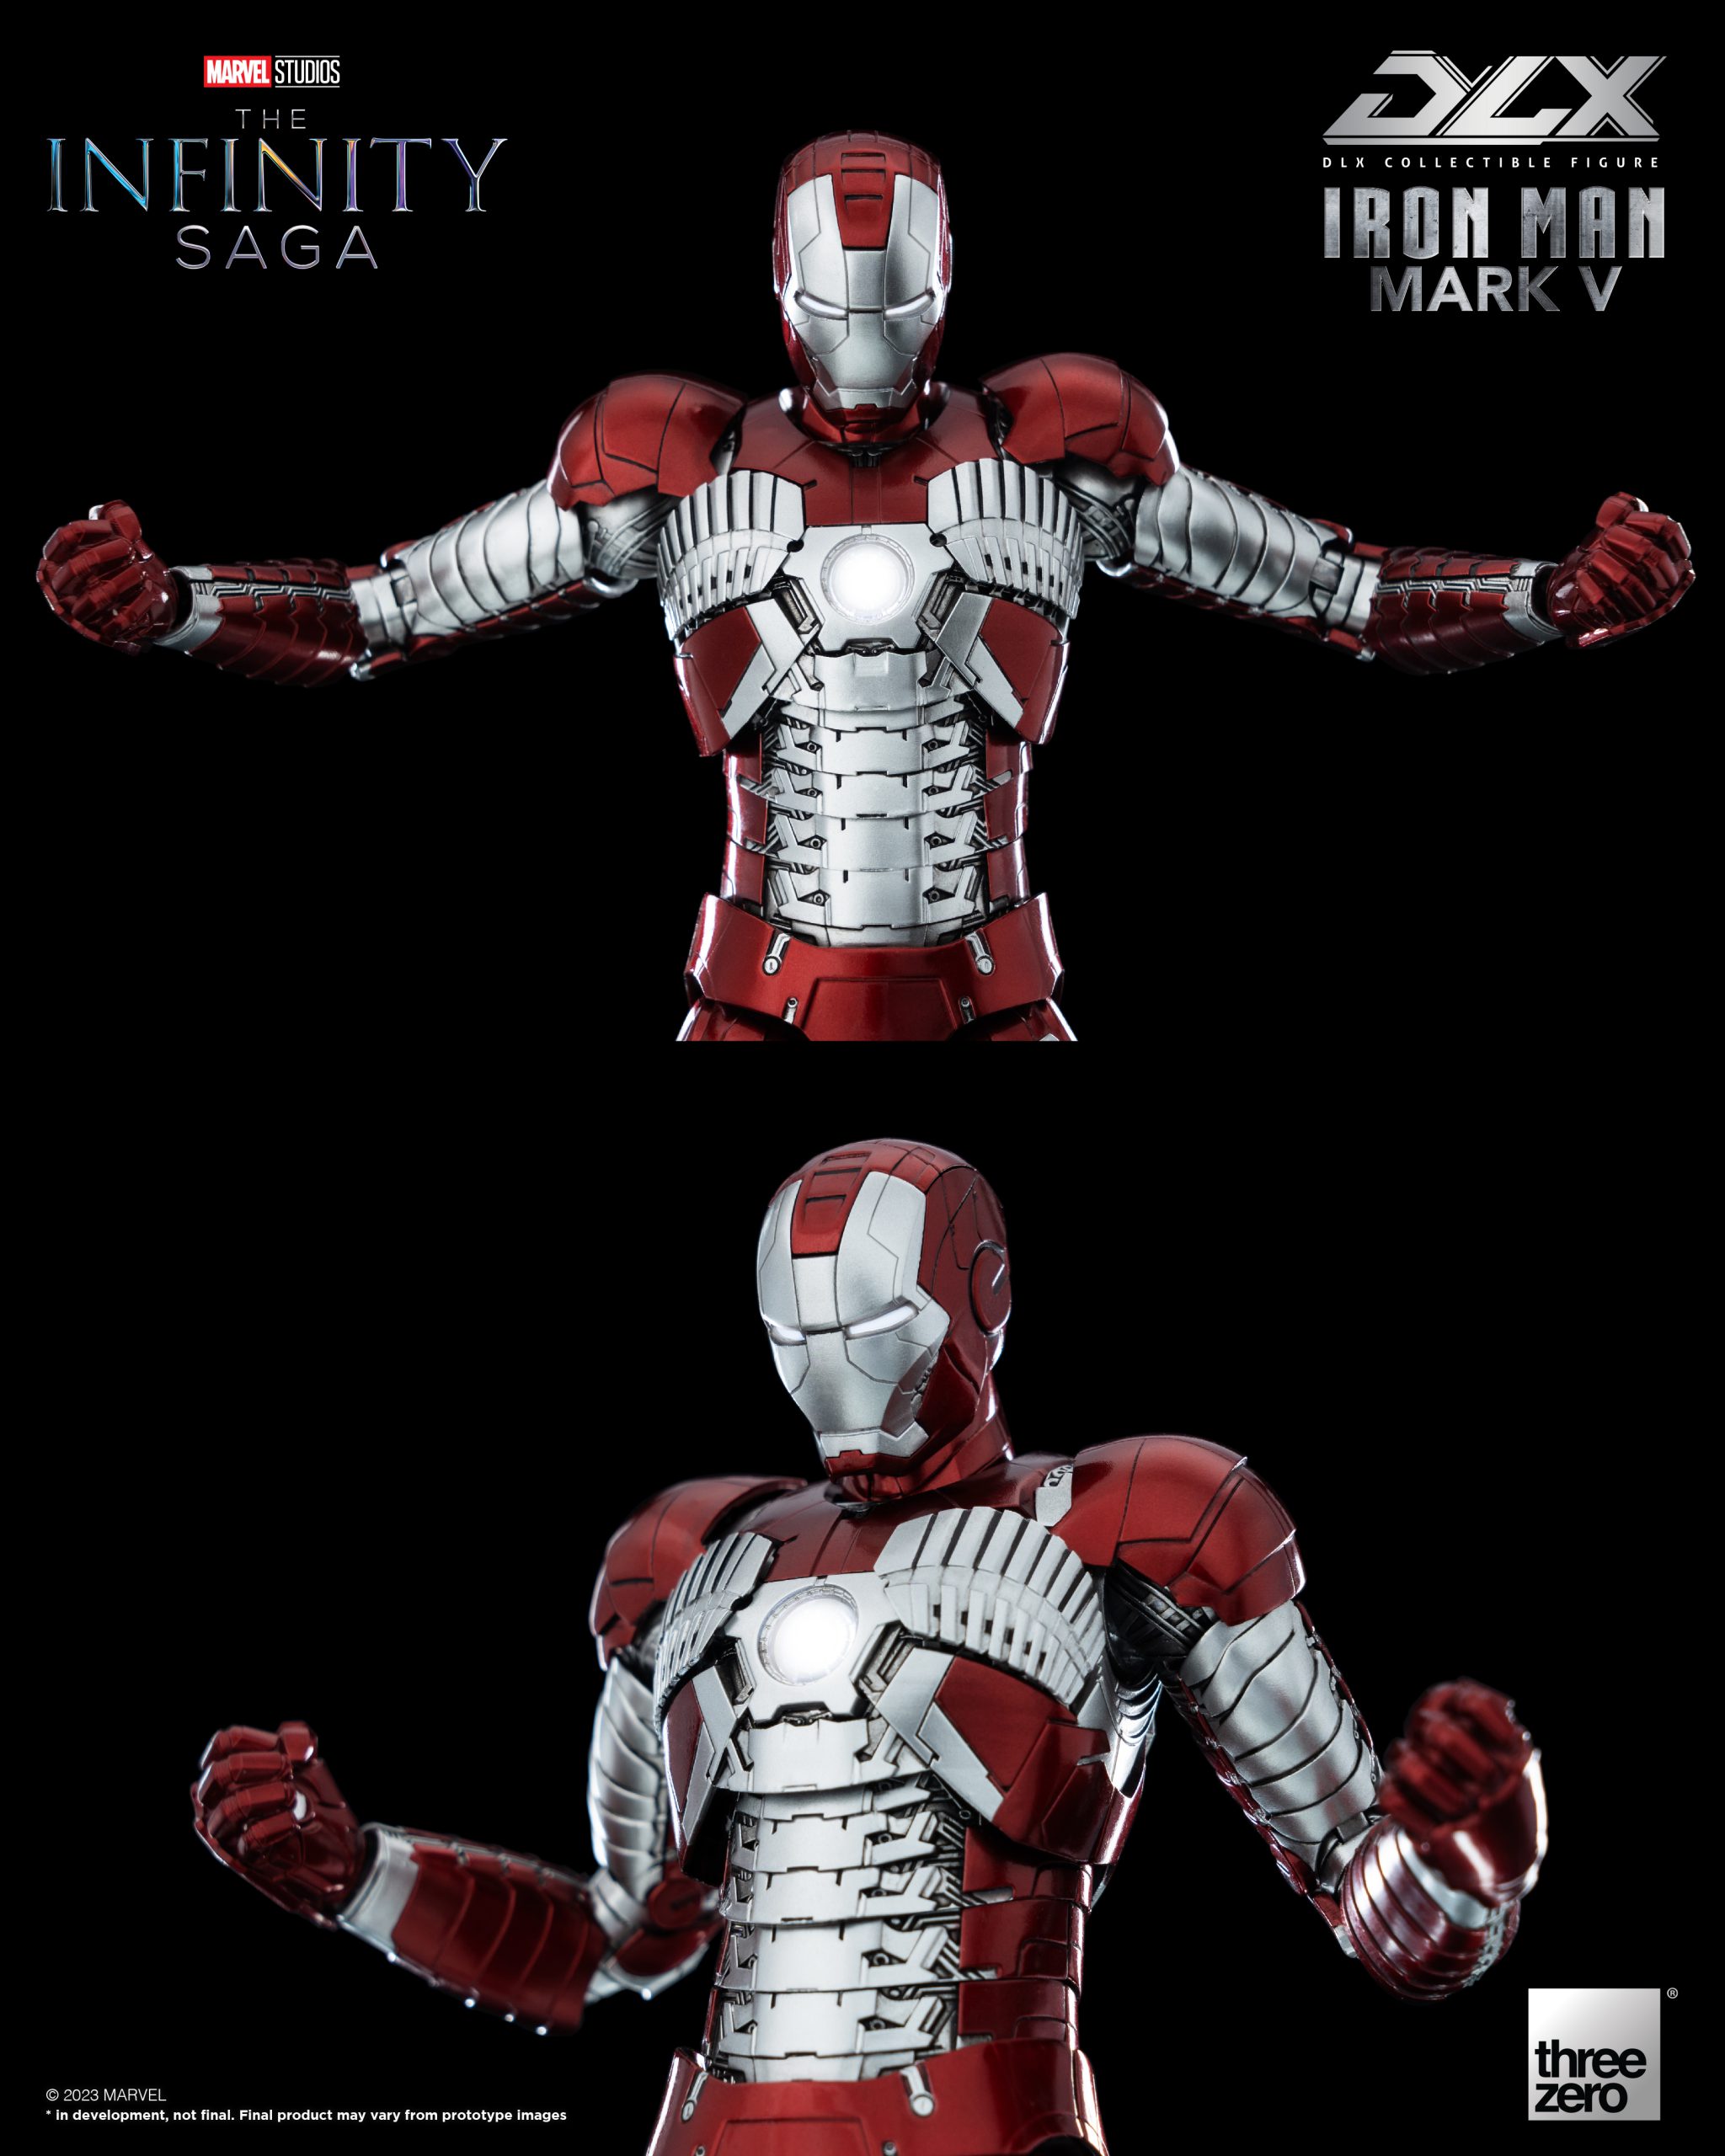 Marvel Studios: The Infinity Saga, DLX Iron Man Mark 5